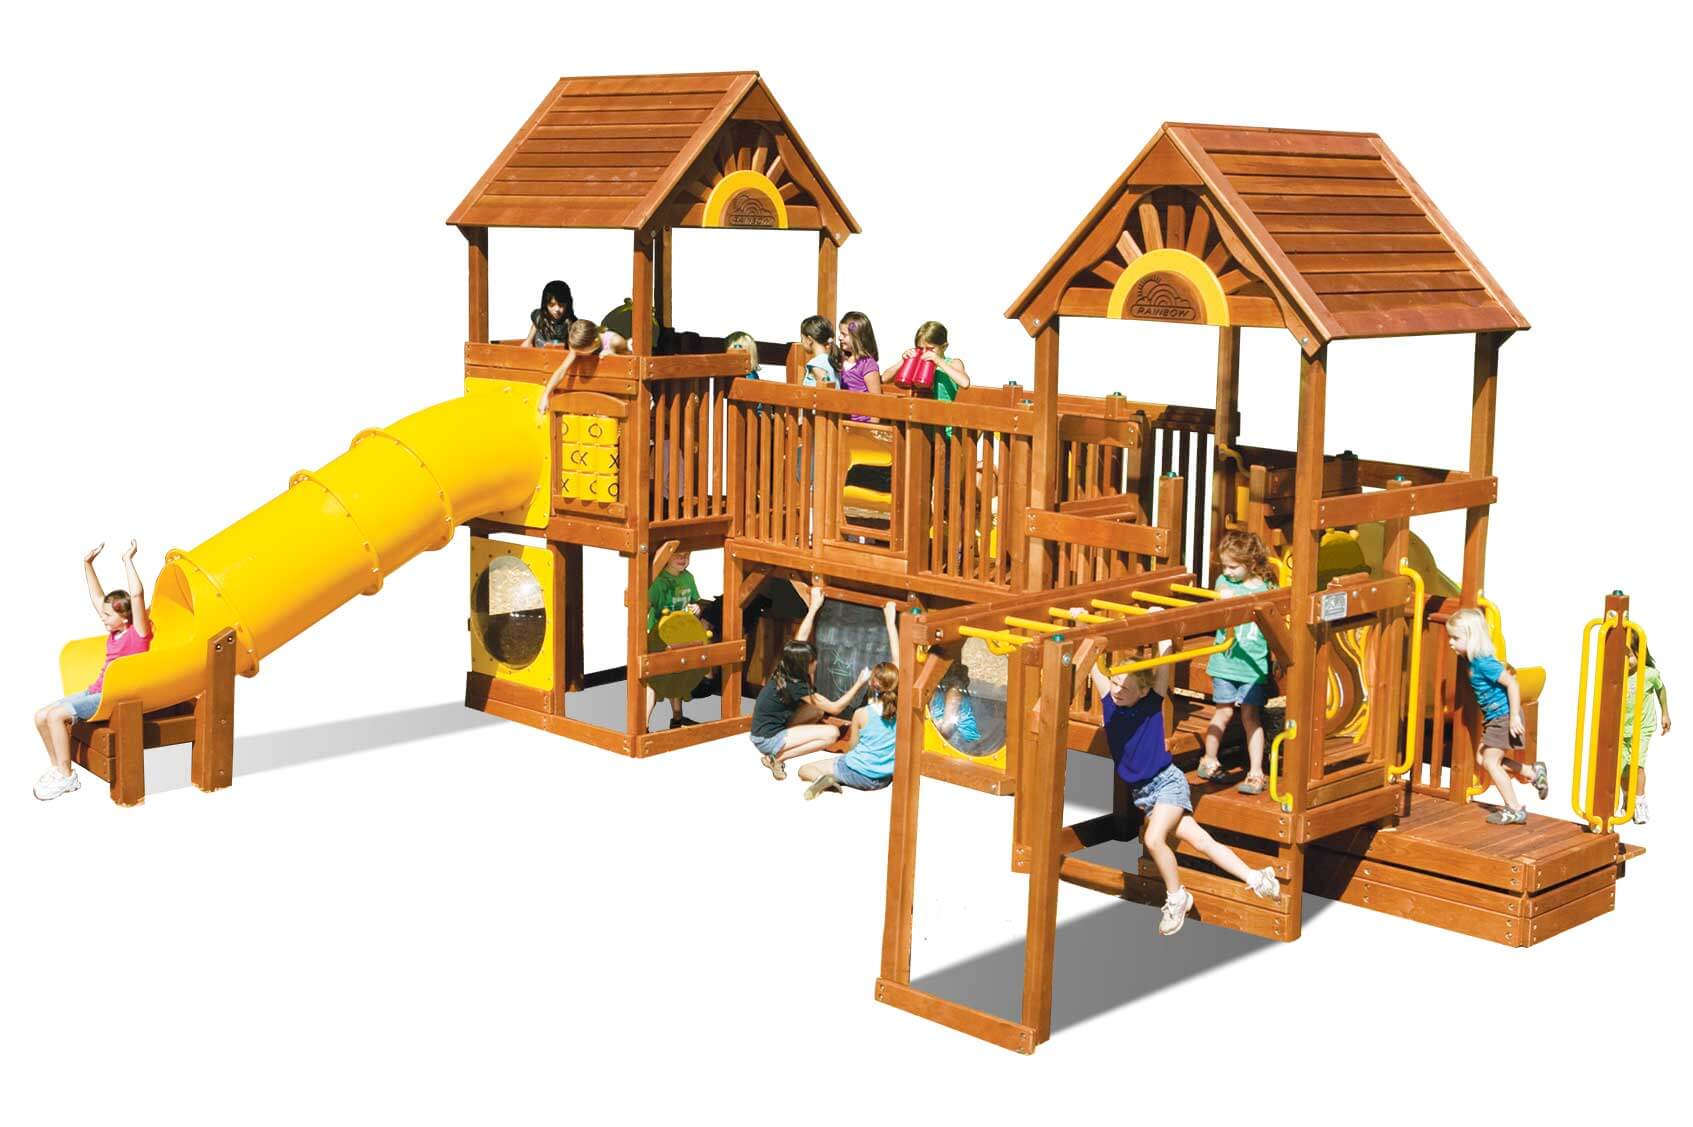 Commercial Playground Equipment – Rainbow Play Village Design B (RPS-97B)